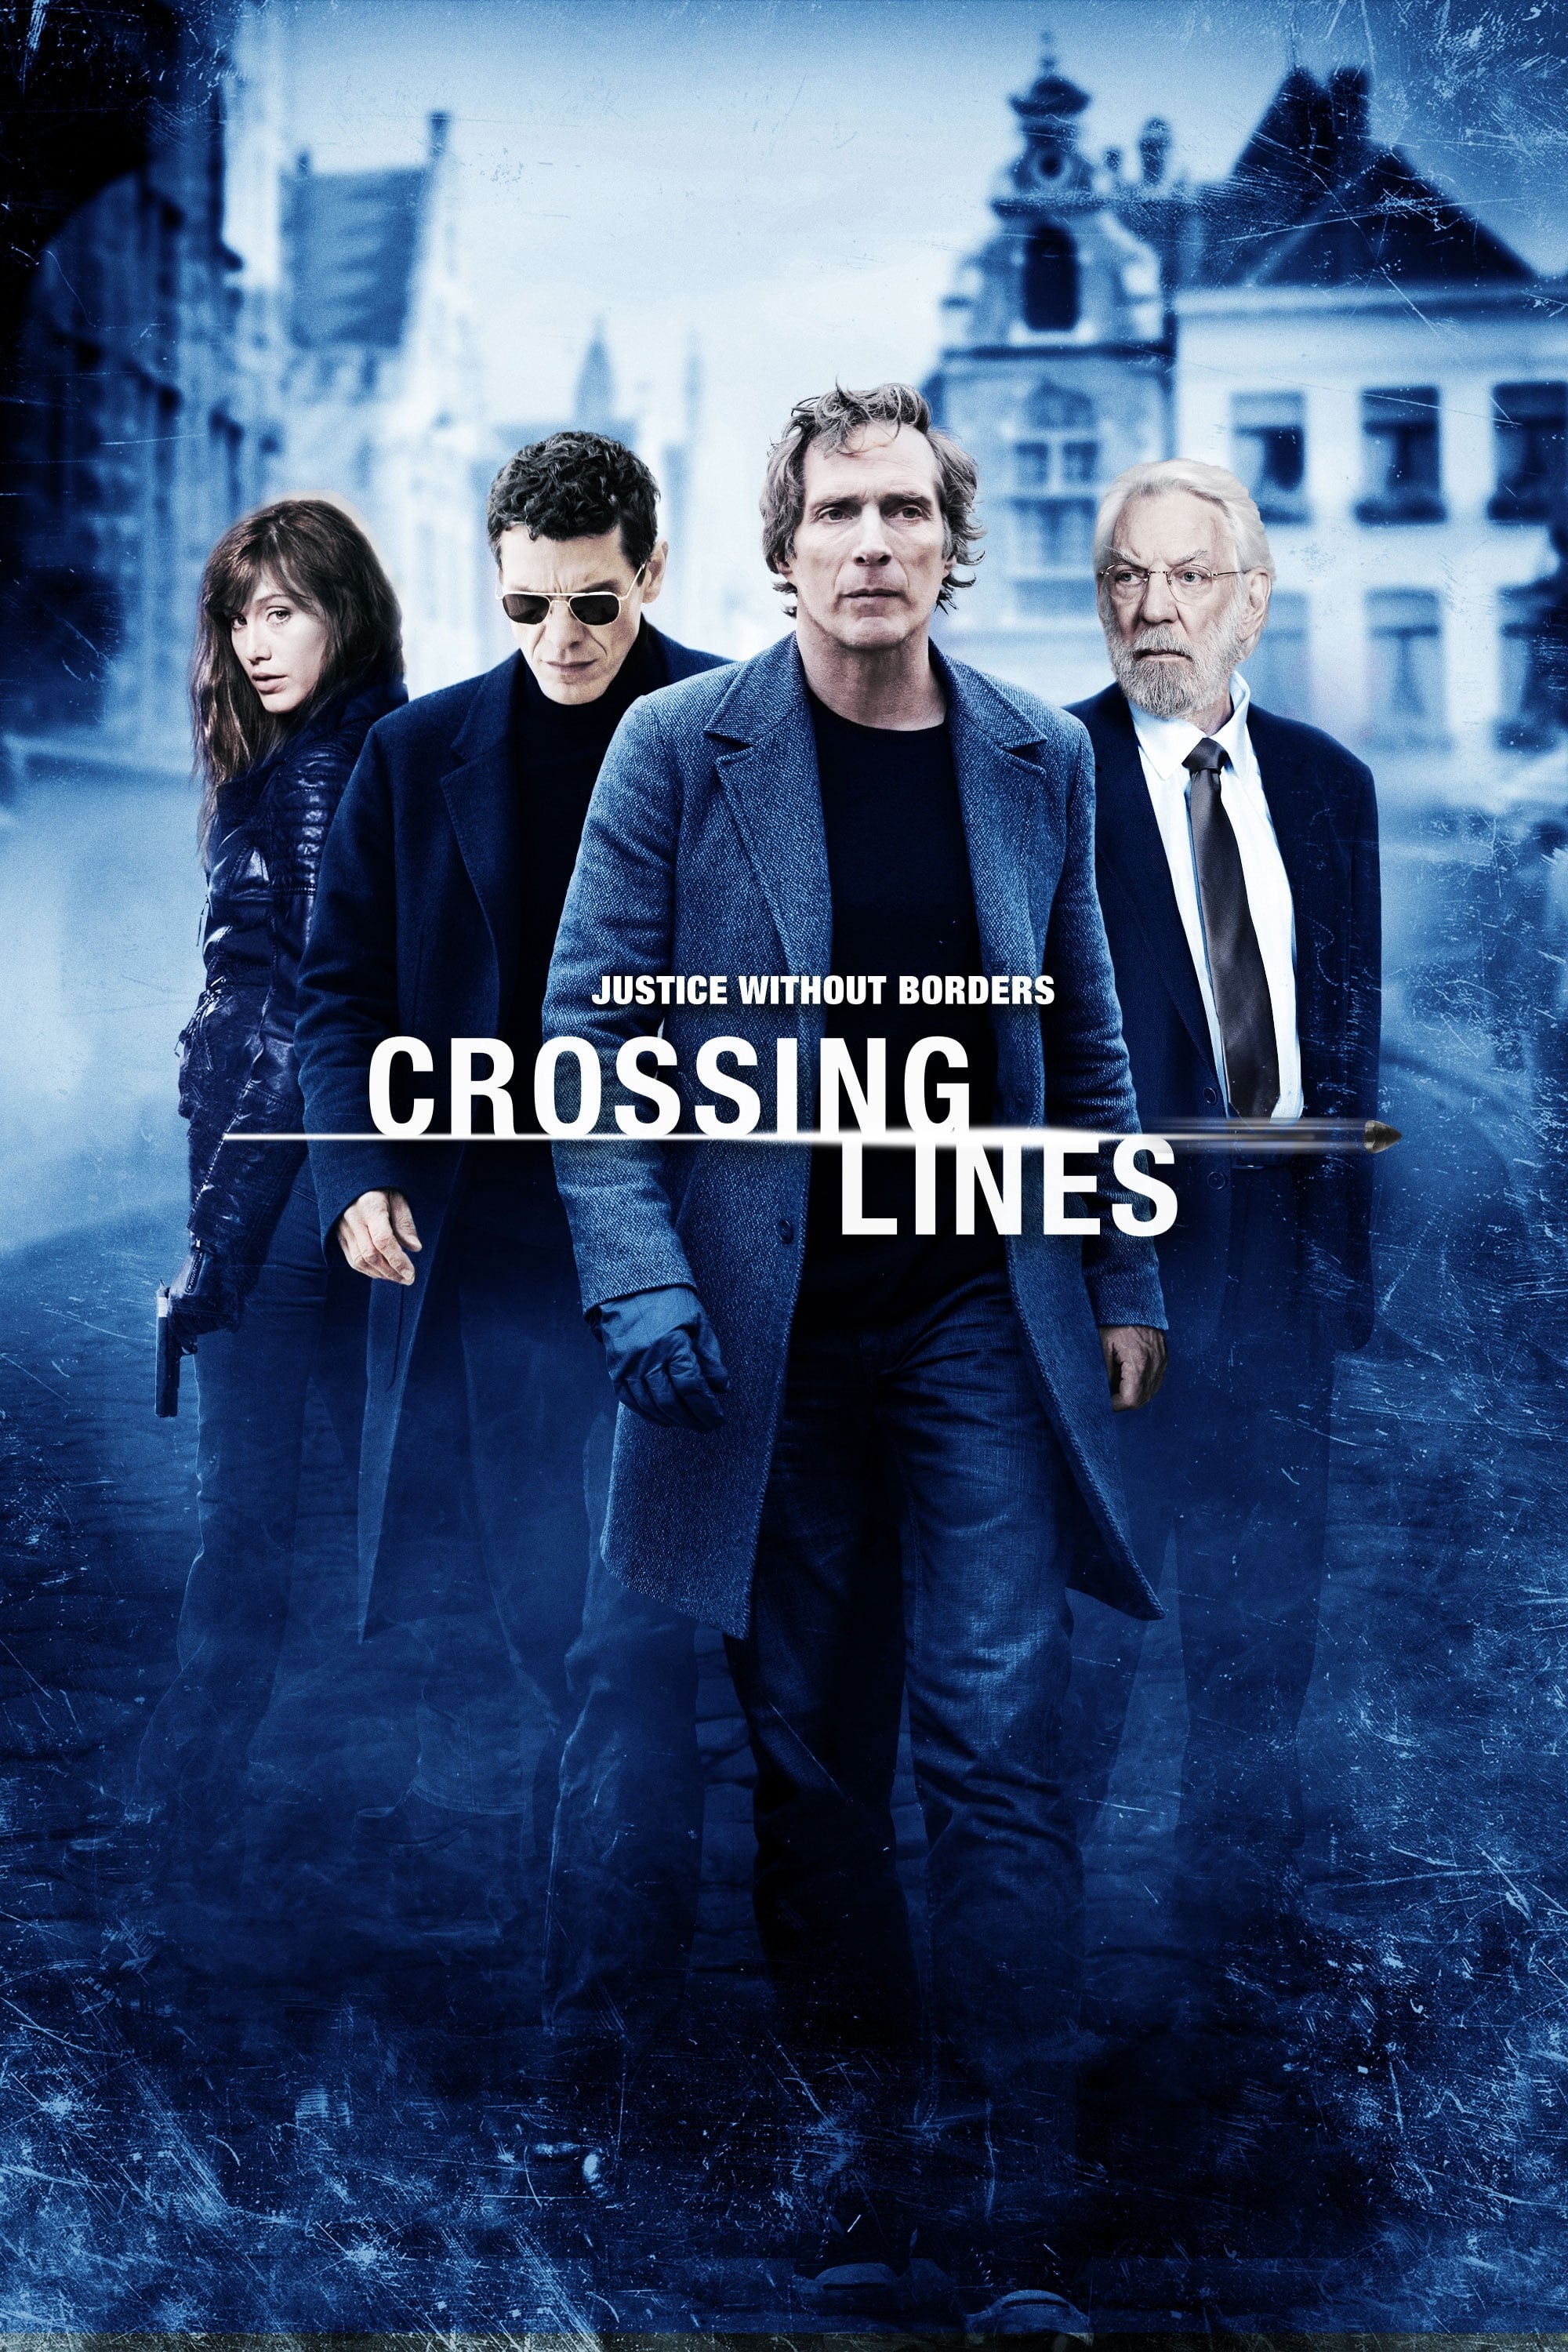 Crossing Lines (2013)